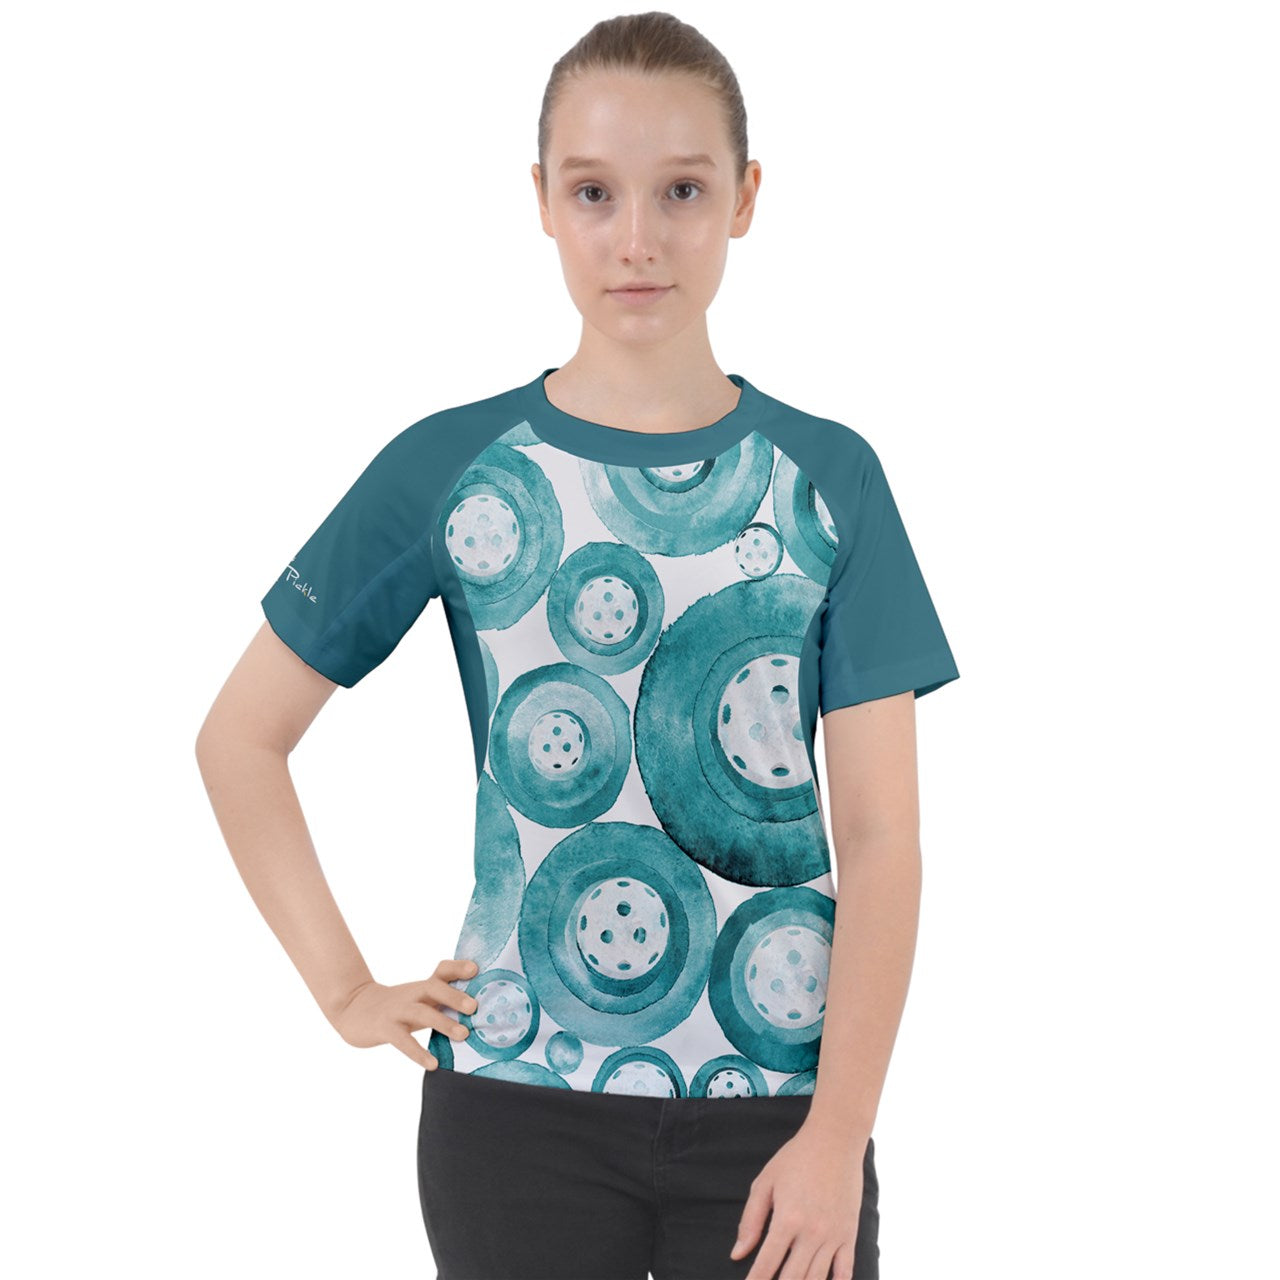 Heidi - TW - Women's Pickleball Sport Raglan T-shirt by Dizzy Pickle